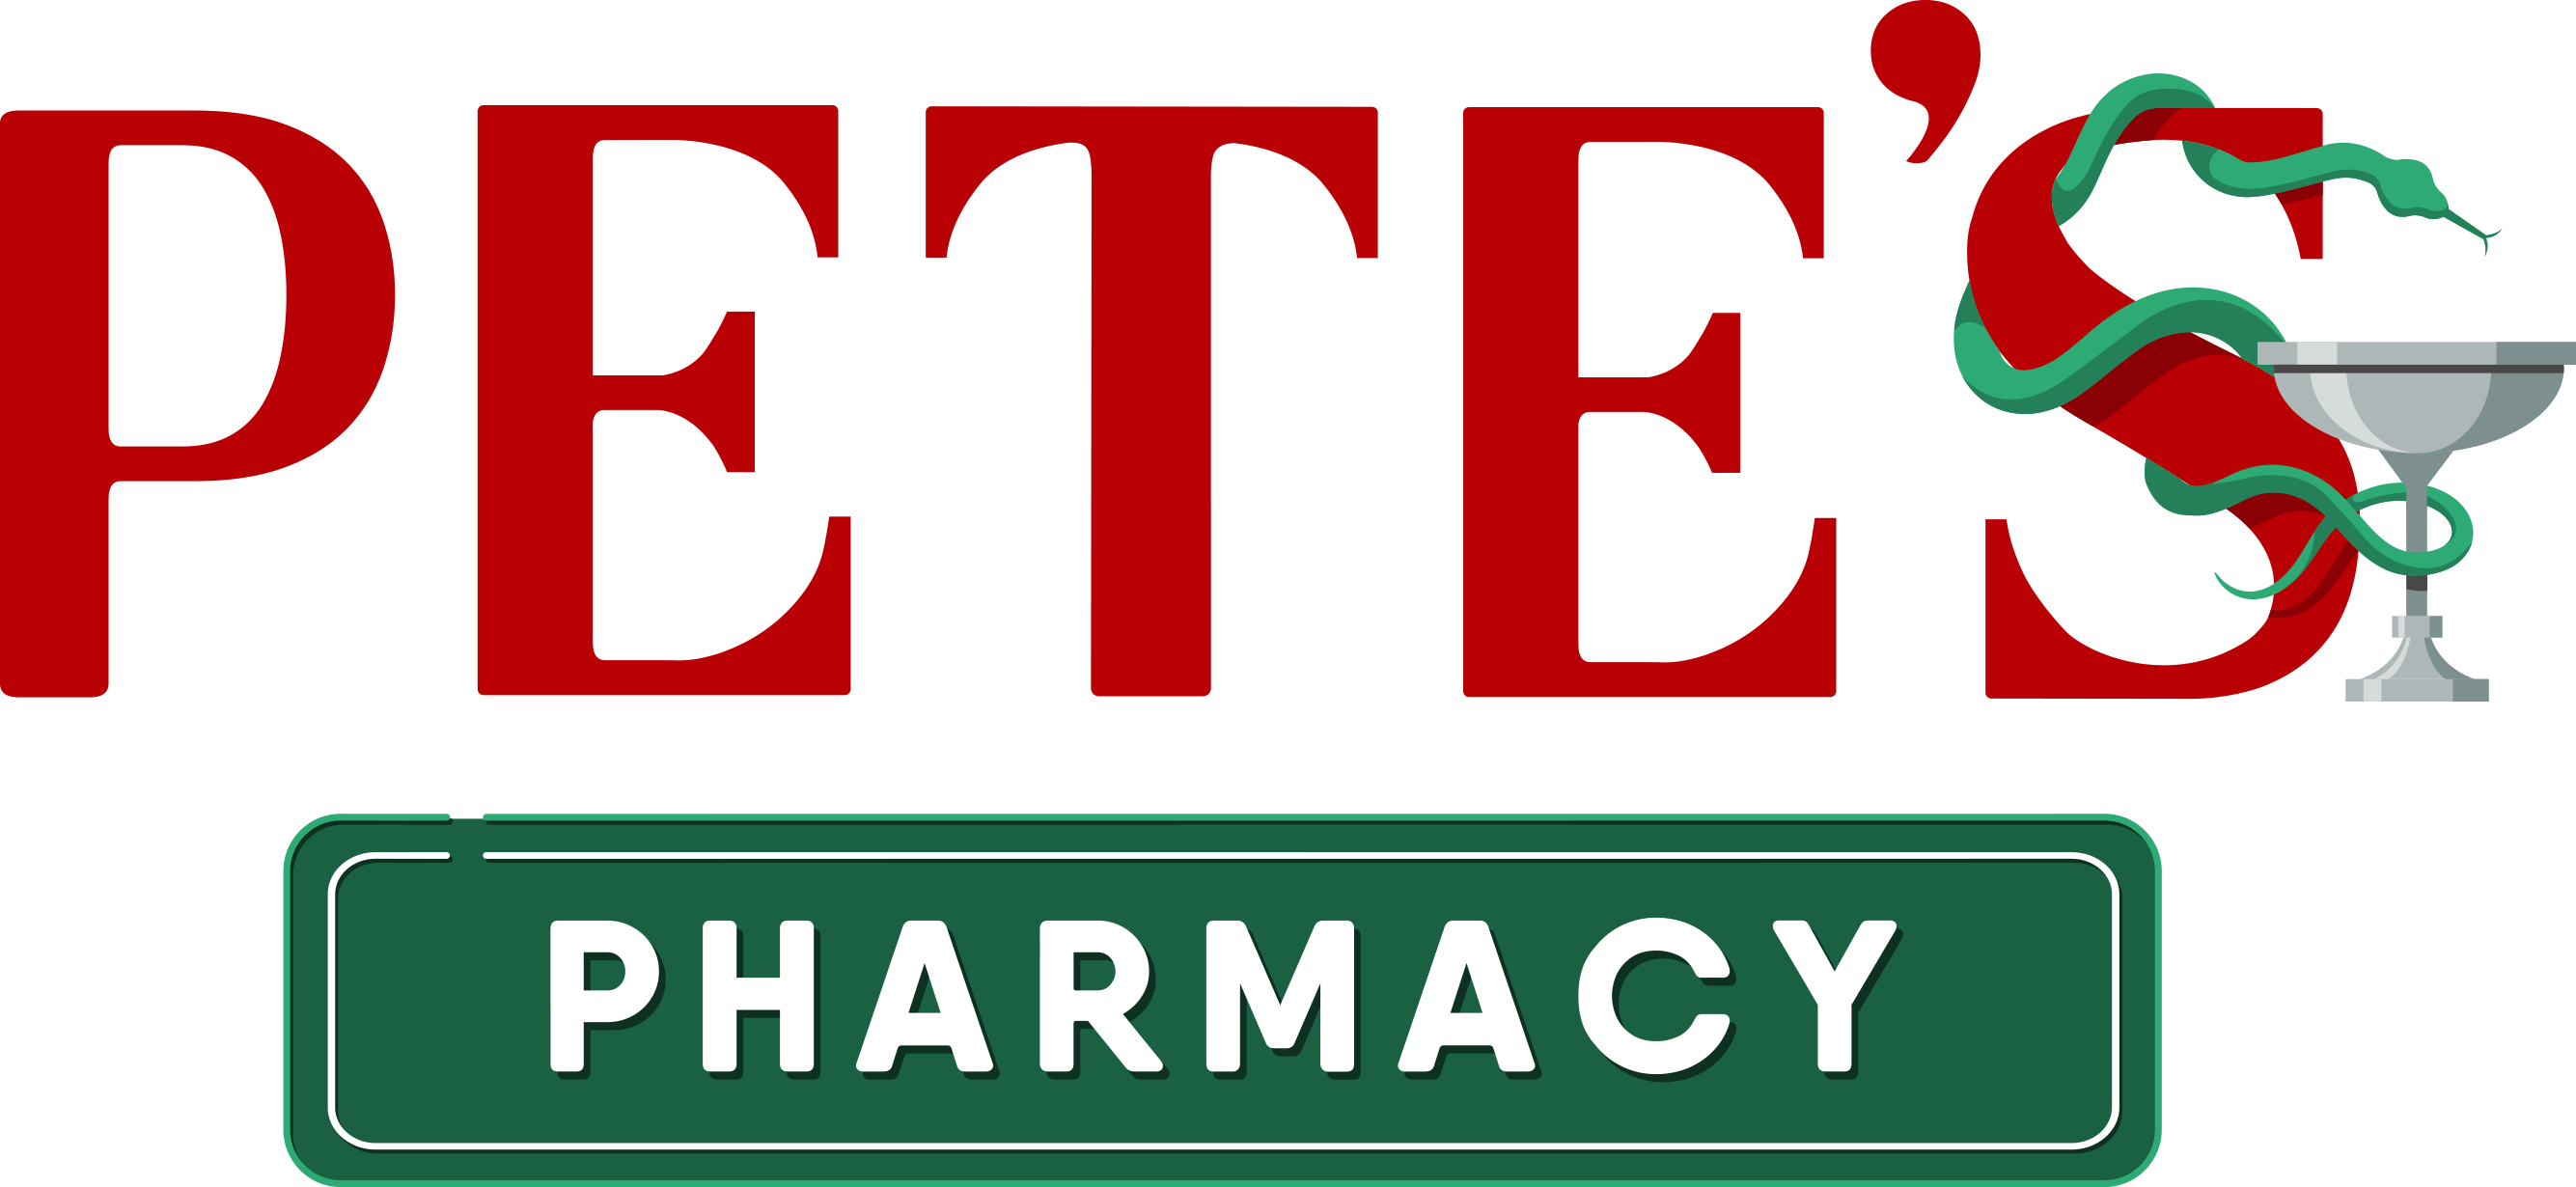 Pete's Family Pharmacy